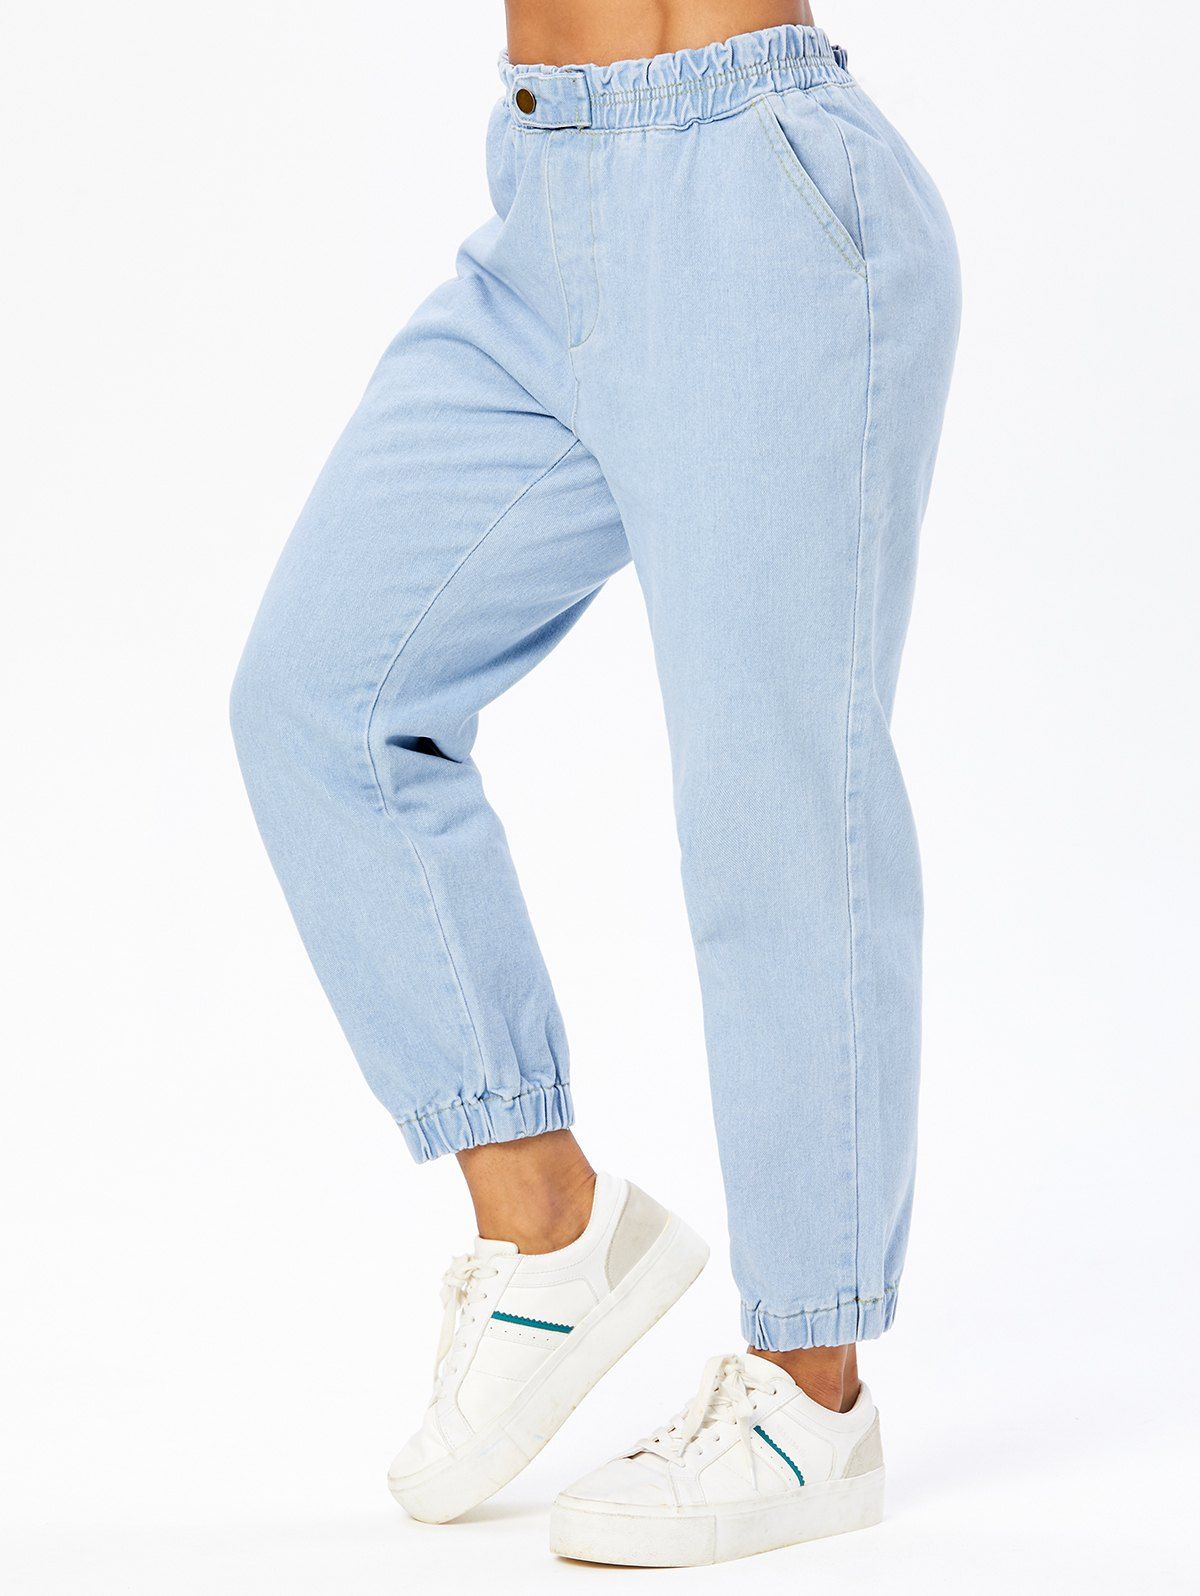 Casual Jeans Light Wash Solid Color Jeans Elastic Waist Button Pockets Beam Feet Demin Pants - LIGHT BLUE L